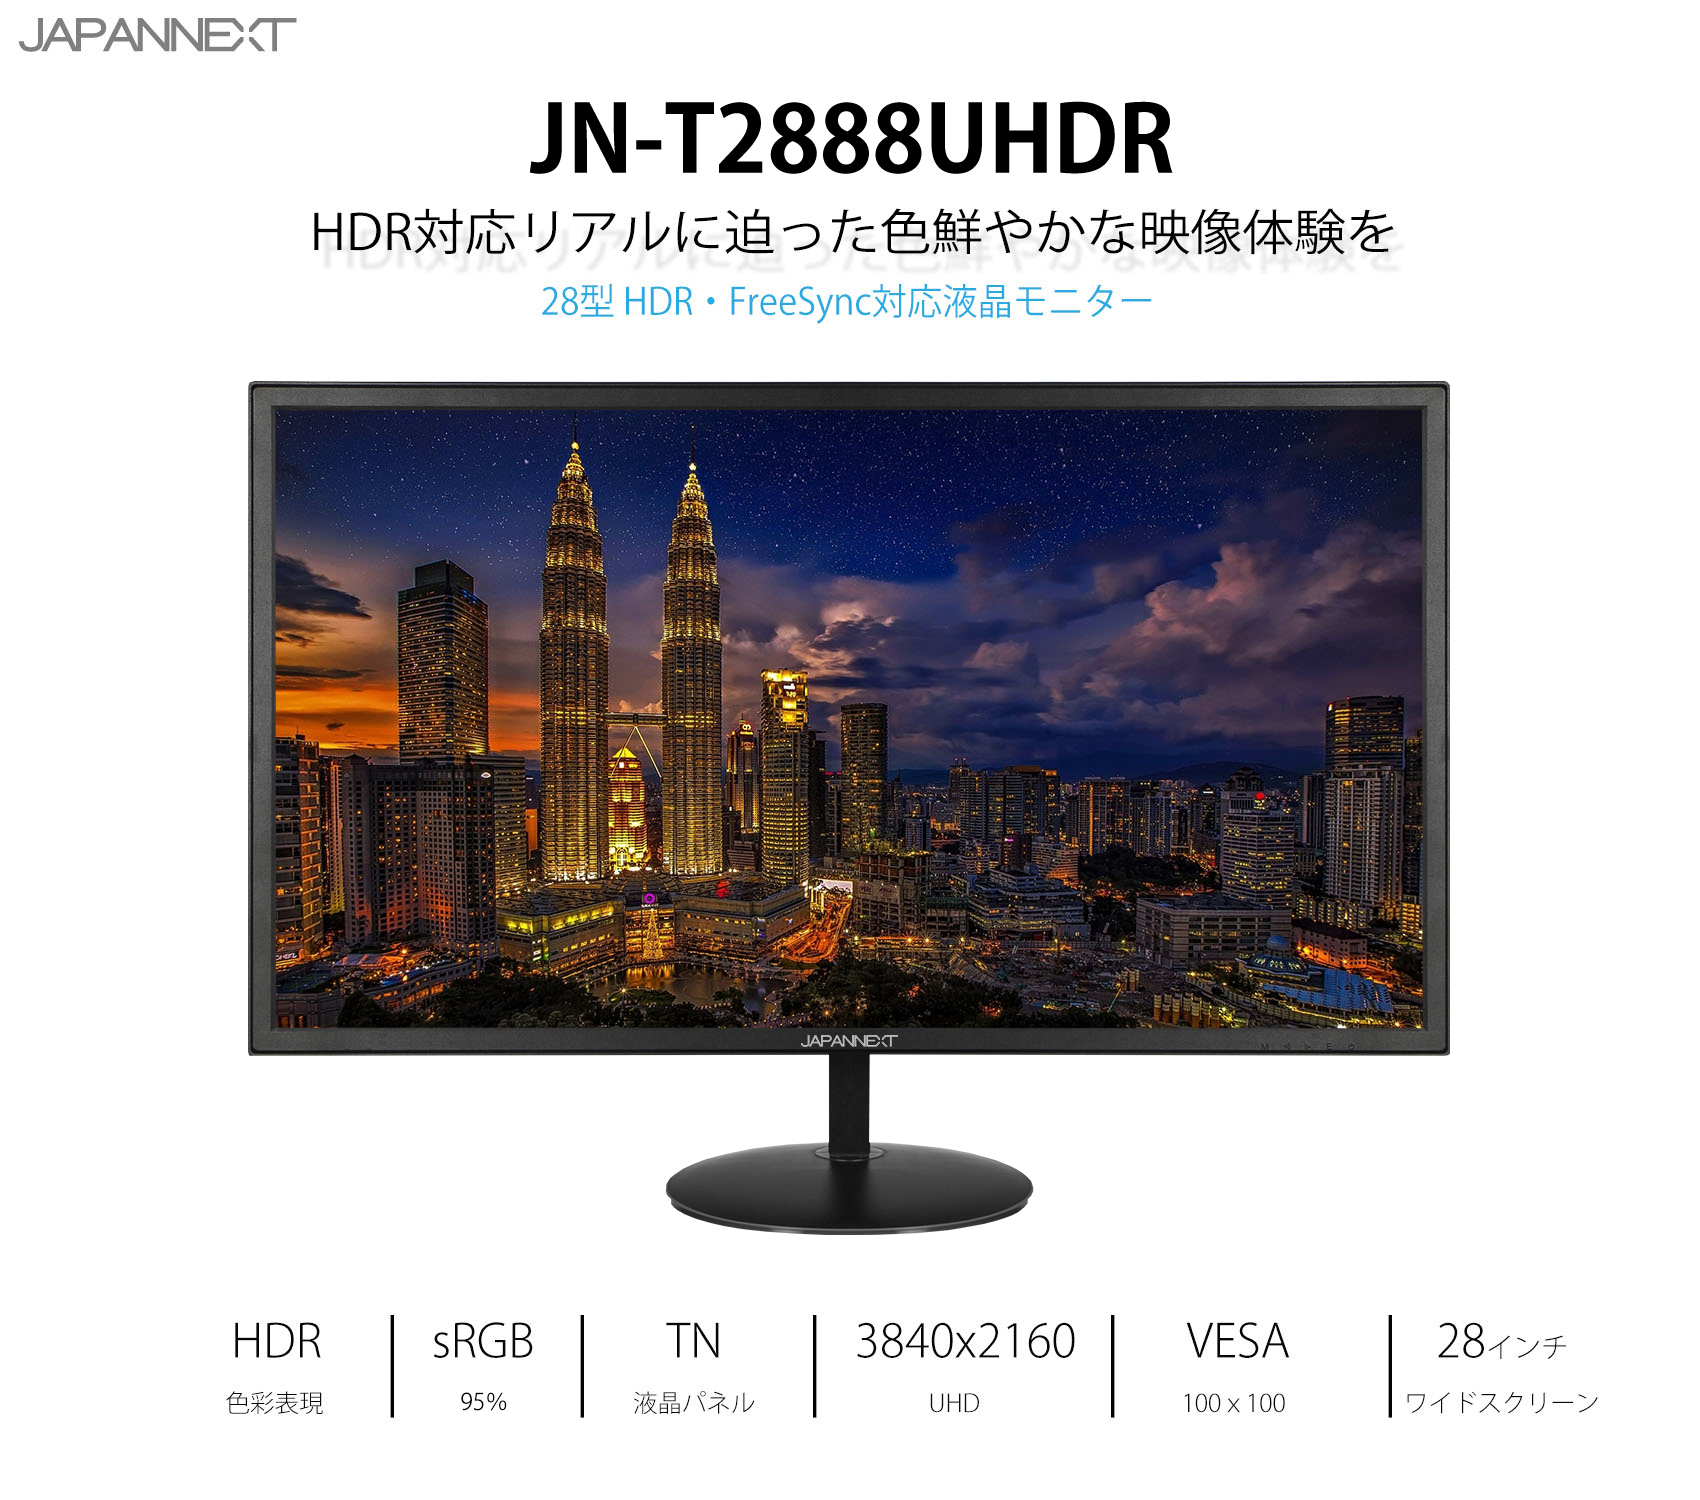 JN-T2820UHD-S specs